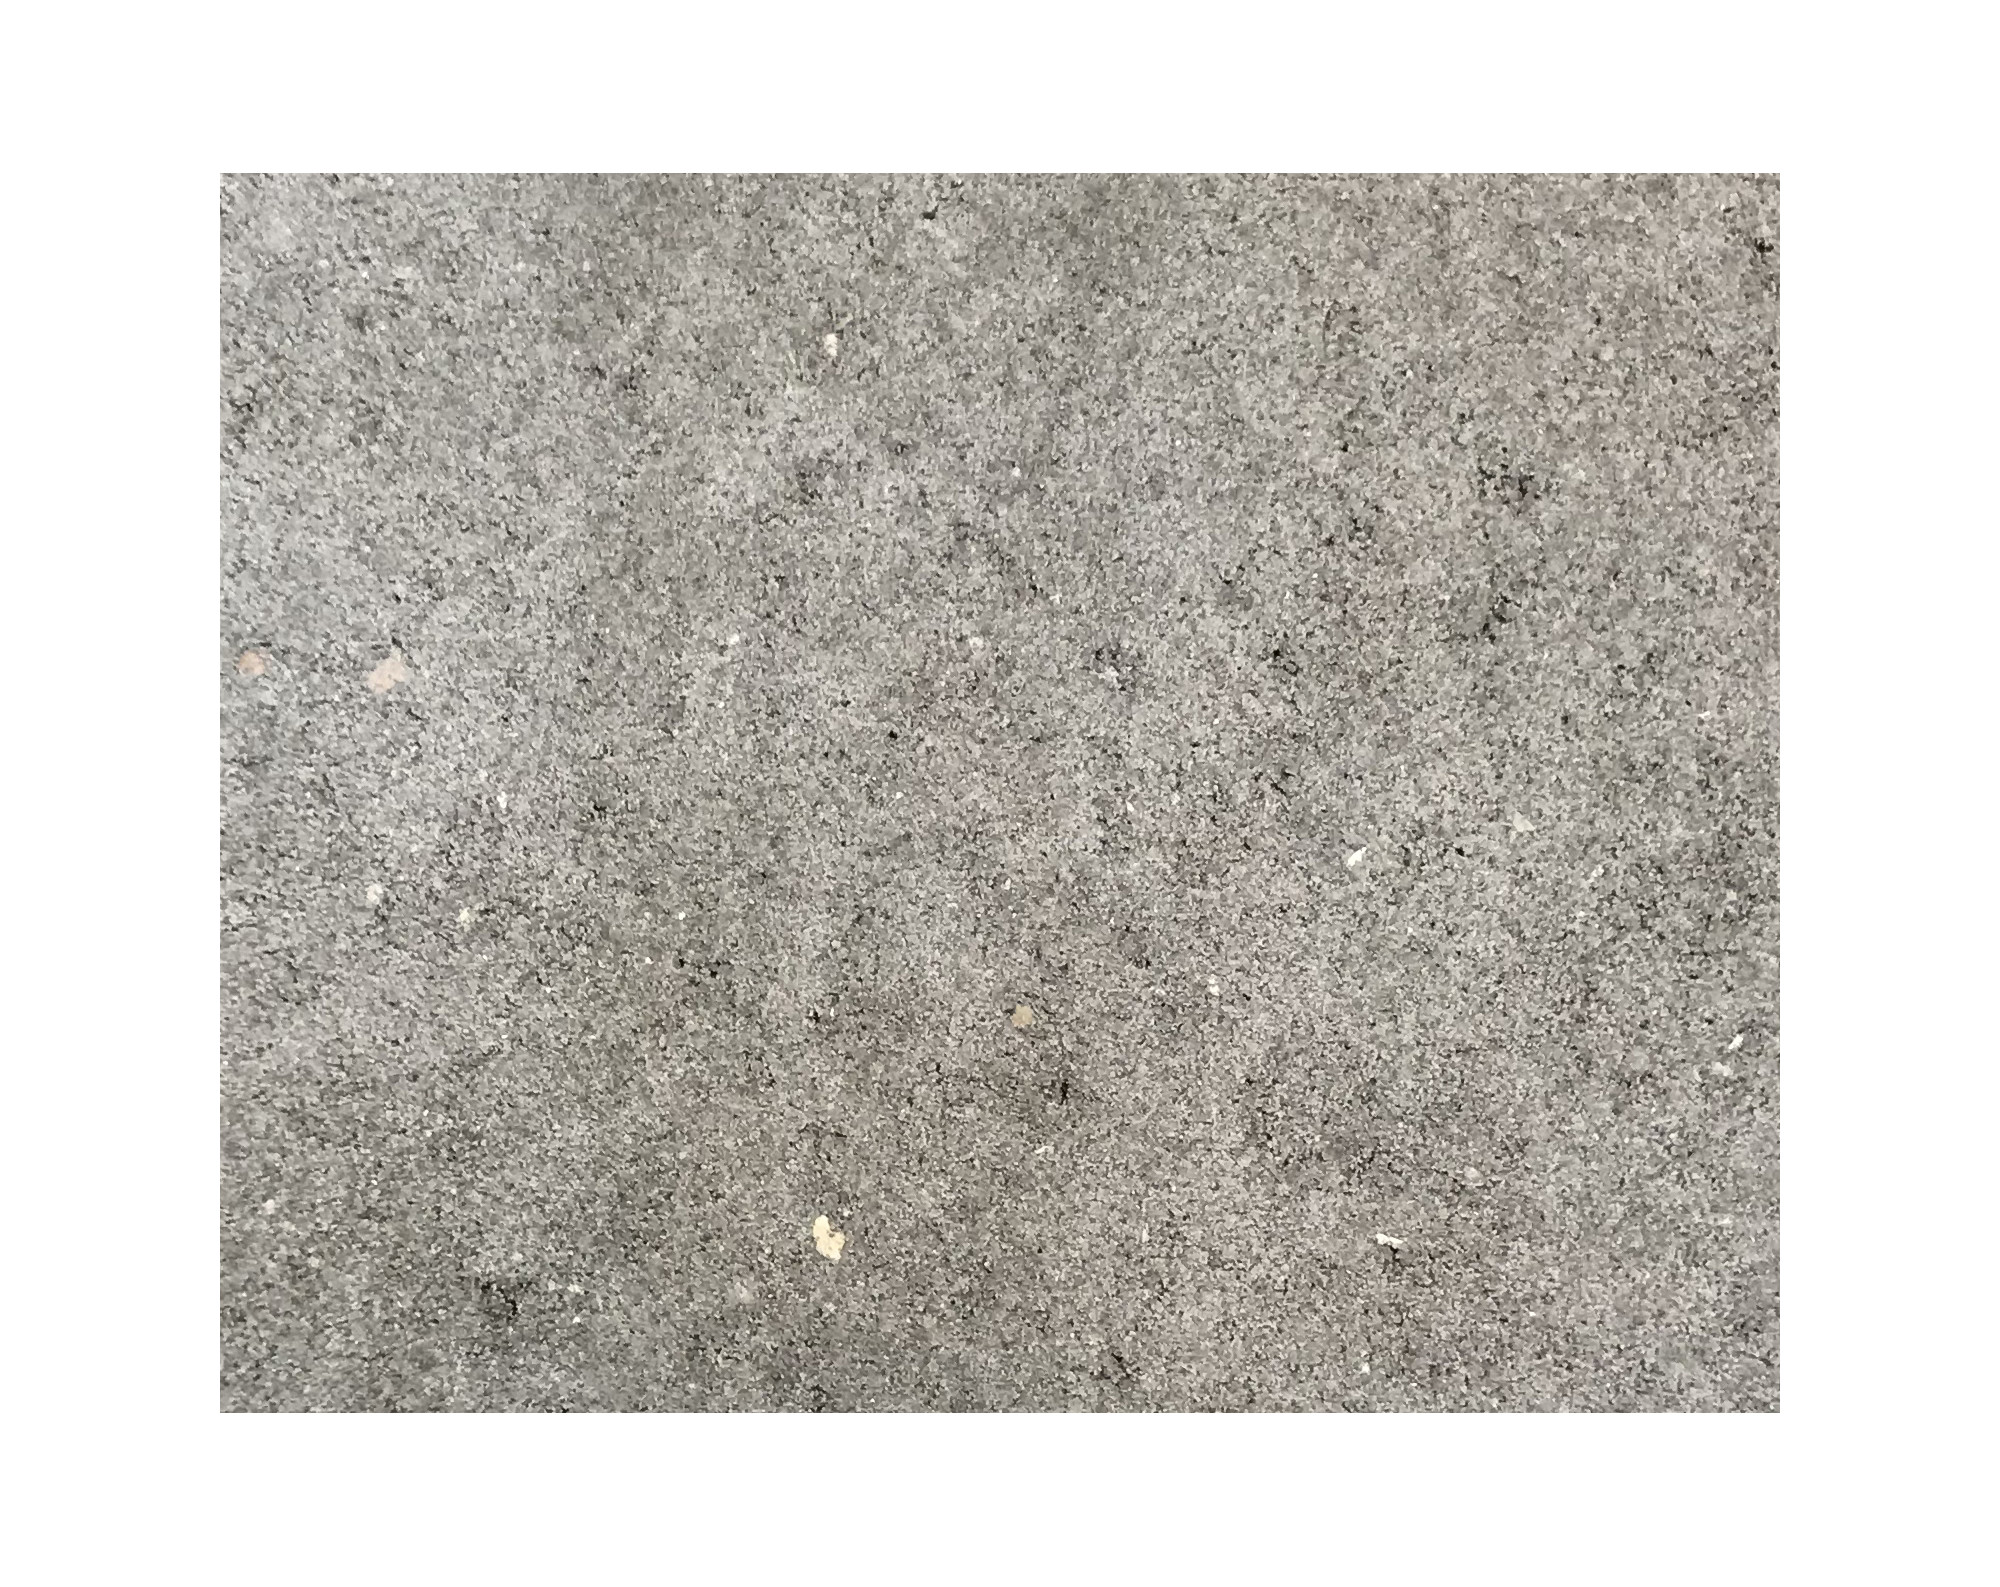 Harmo roc nevadaset, rustica-serie, 8-vormig d:5,50mx8,55m, grijs, beton